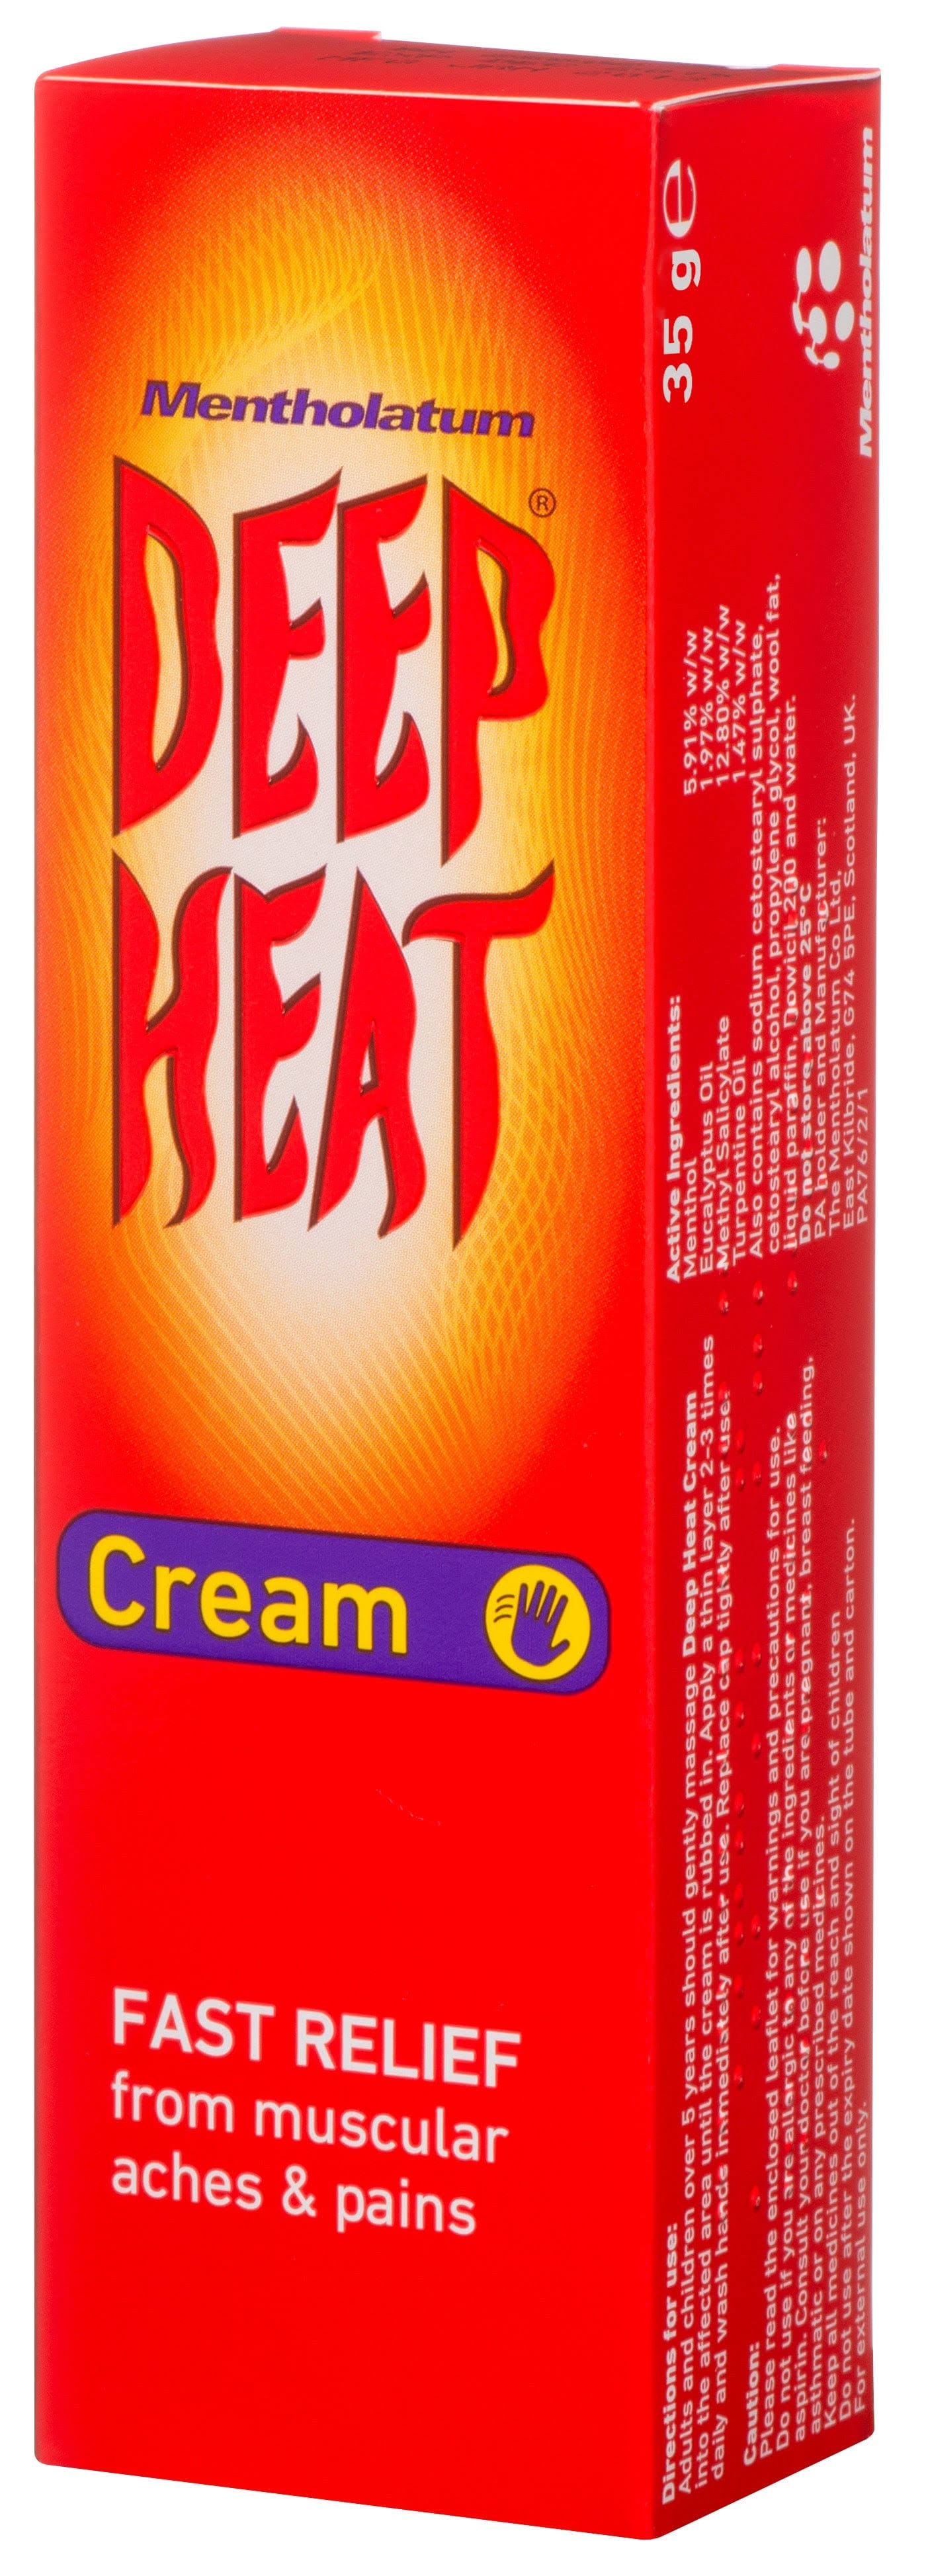 Deep Heat Cream (35g)